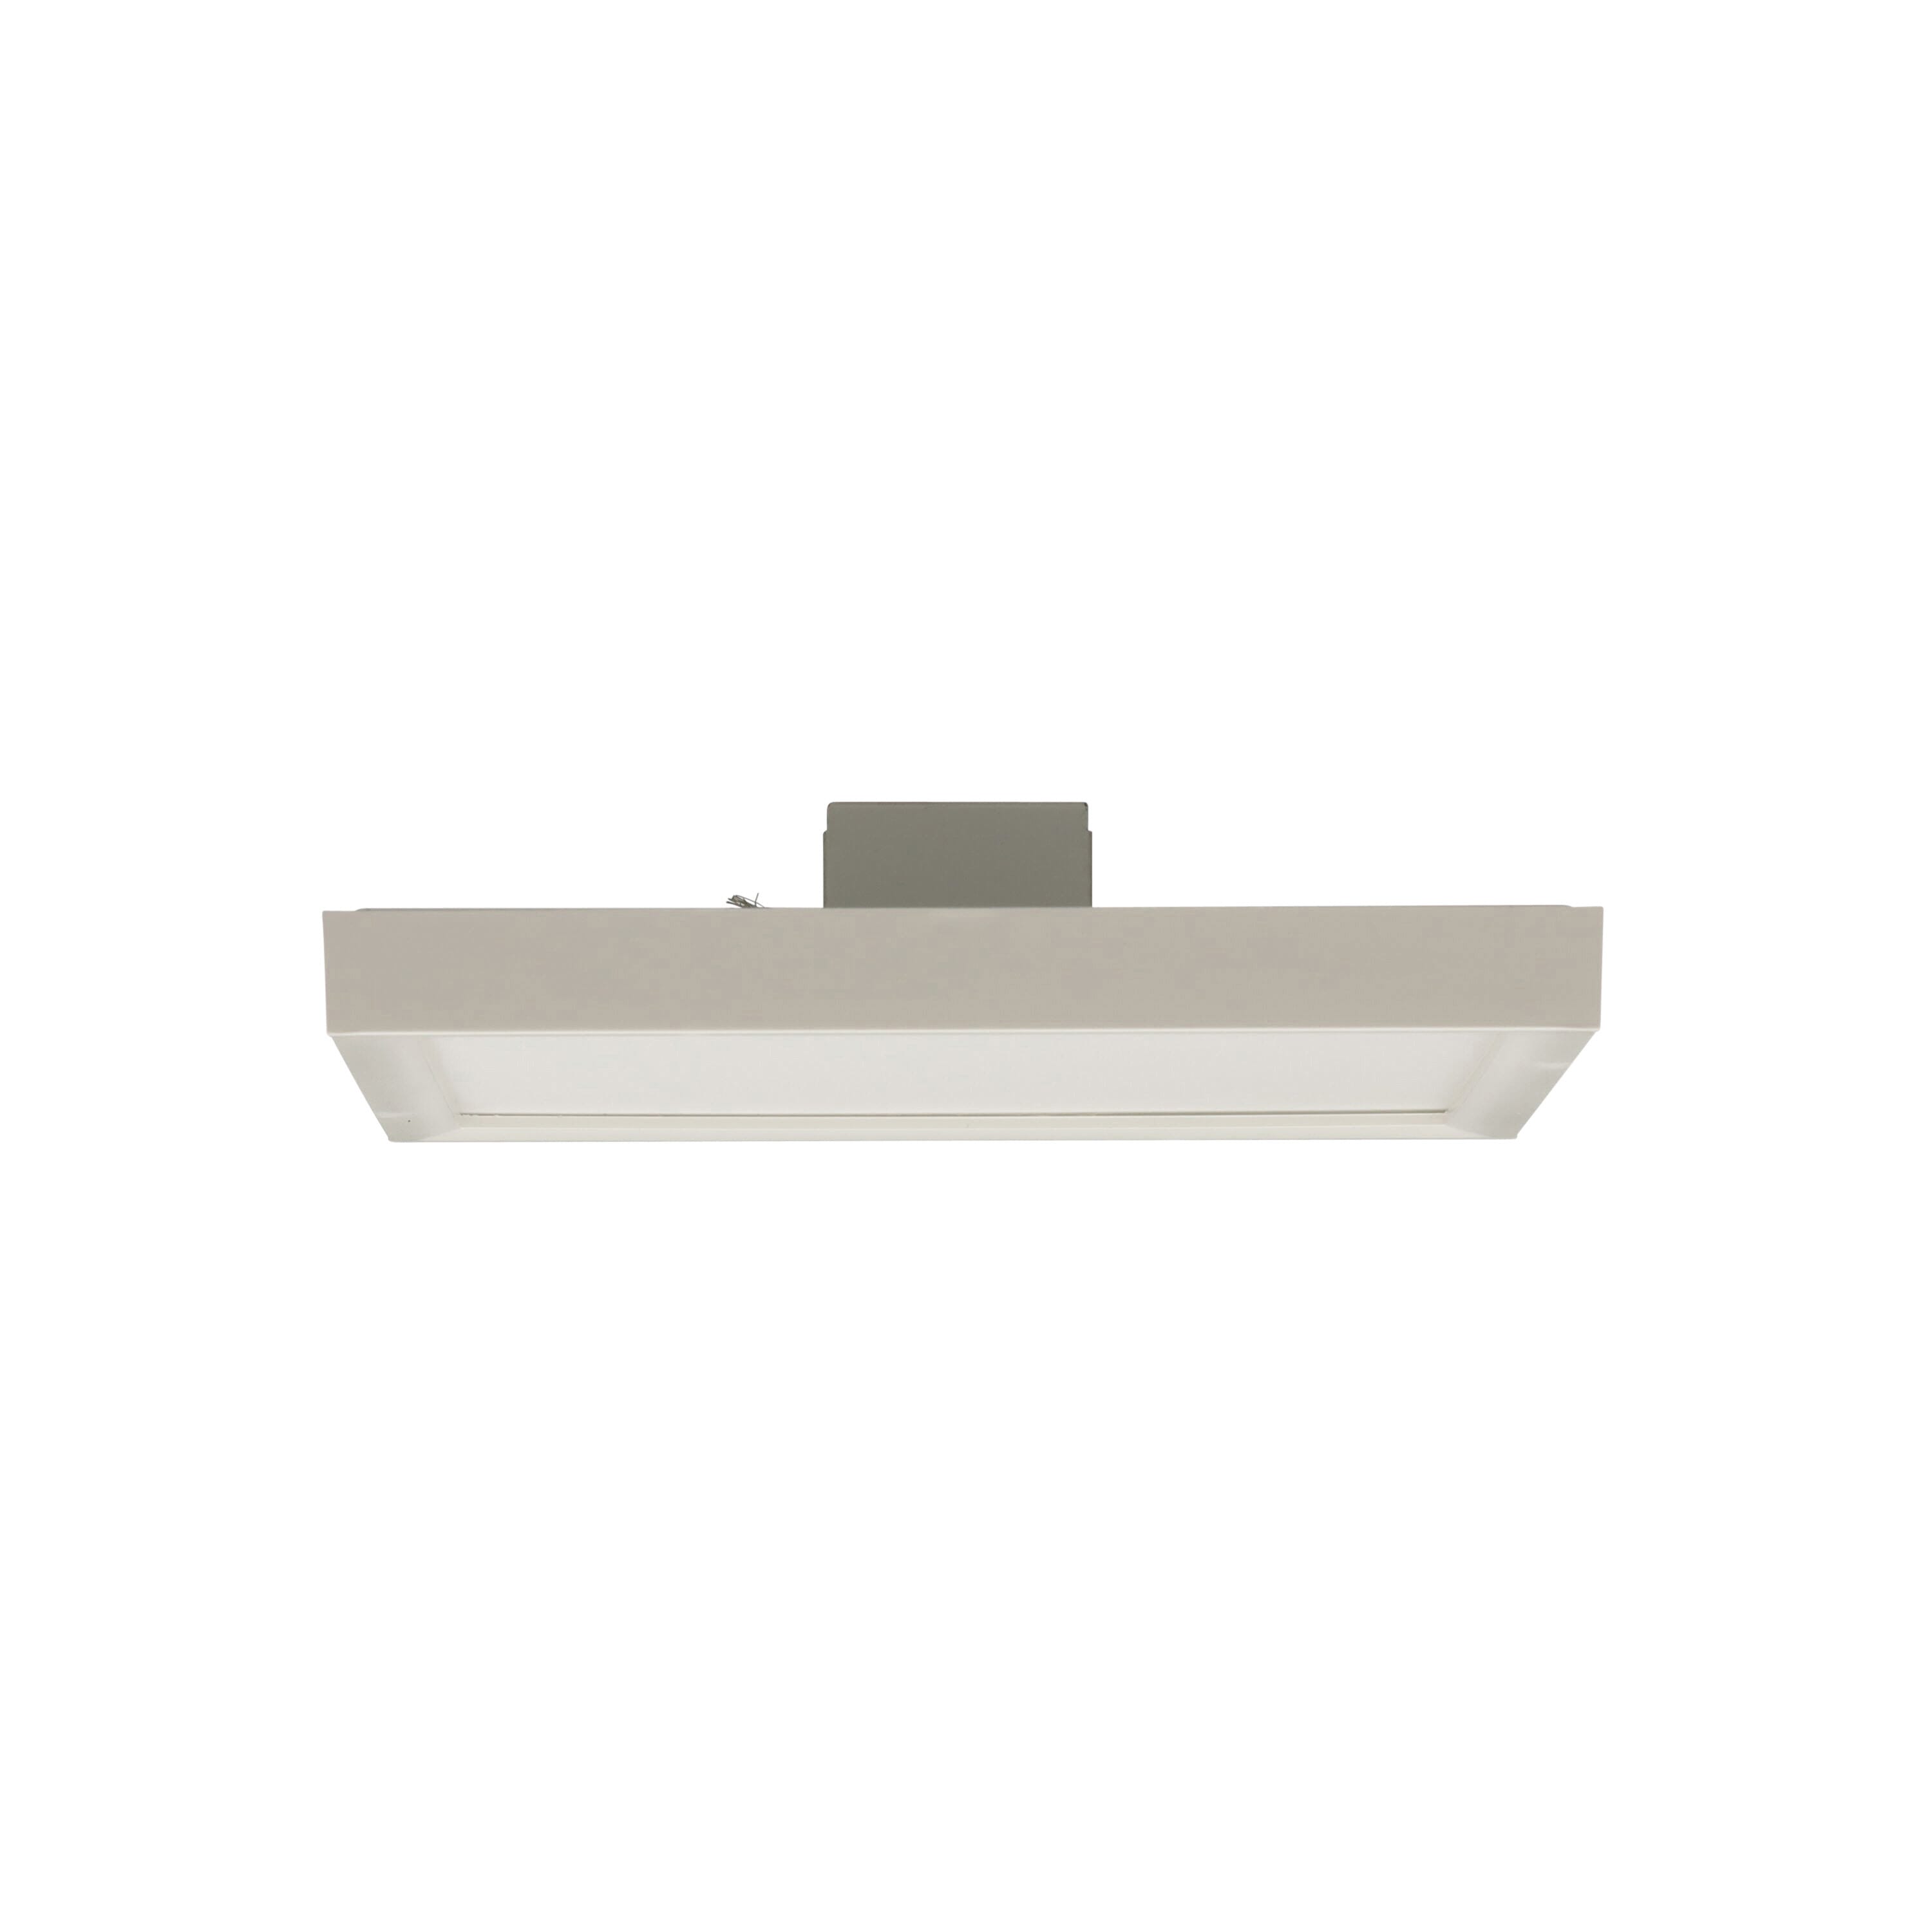 JSFSQ Downlight - Juno SlimForm™ LED Square Surface Mount Downlight